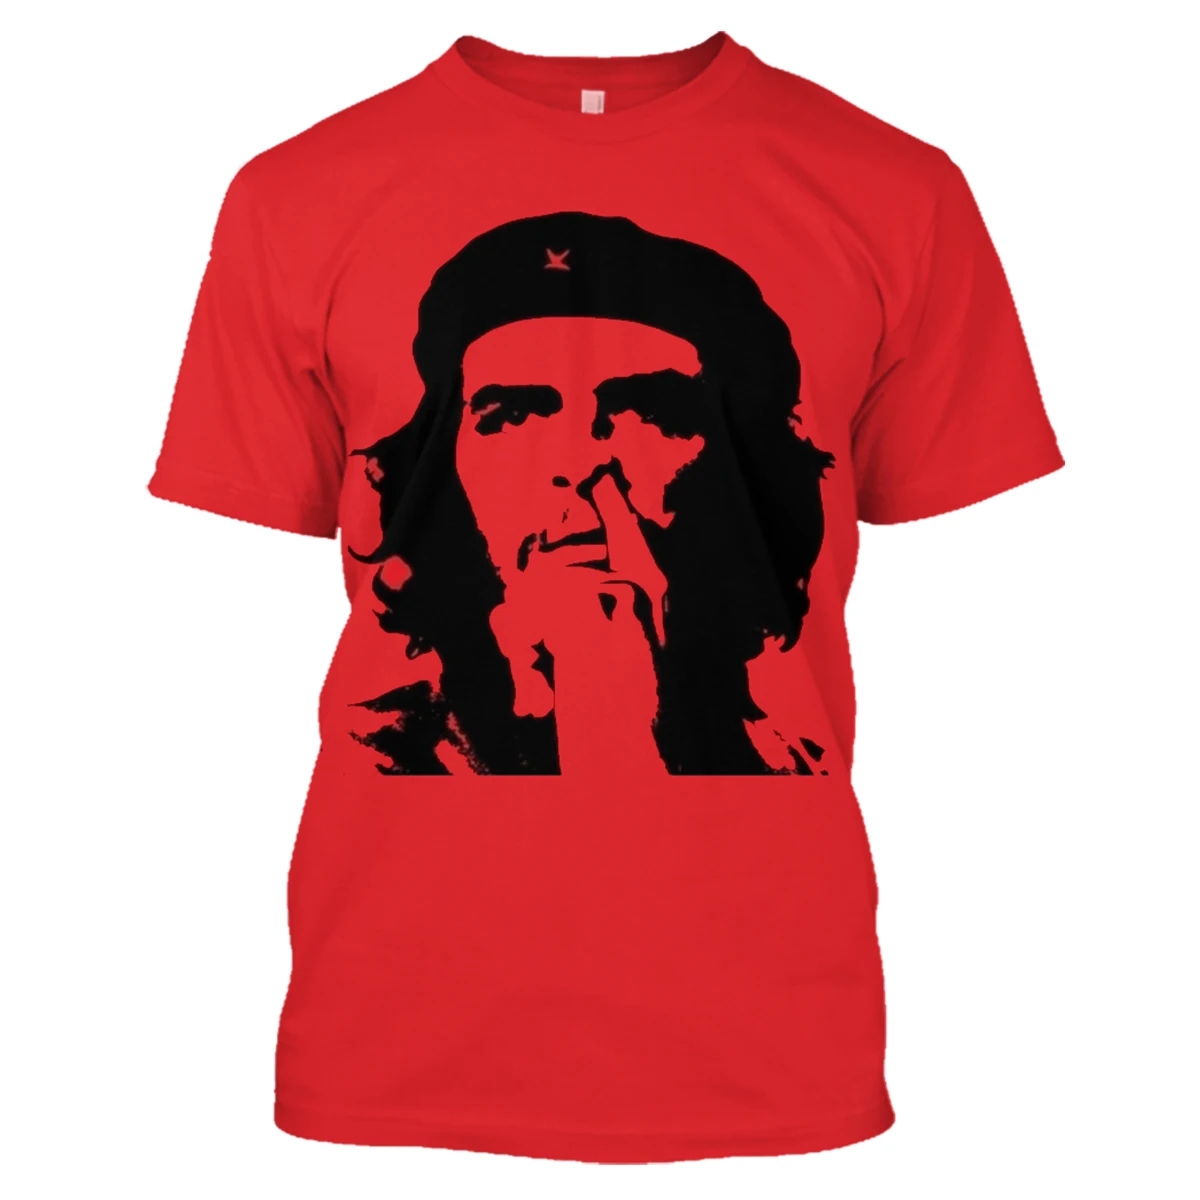 

SONSPEE New Che Guevara 3D Printed Fashion T-Shirt Ladies / Men's Summer Short-Sleeved Casual Style T-Shirt Cigar Smoking Shirt